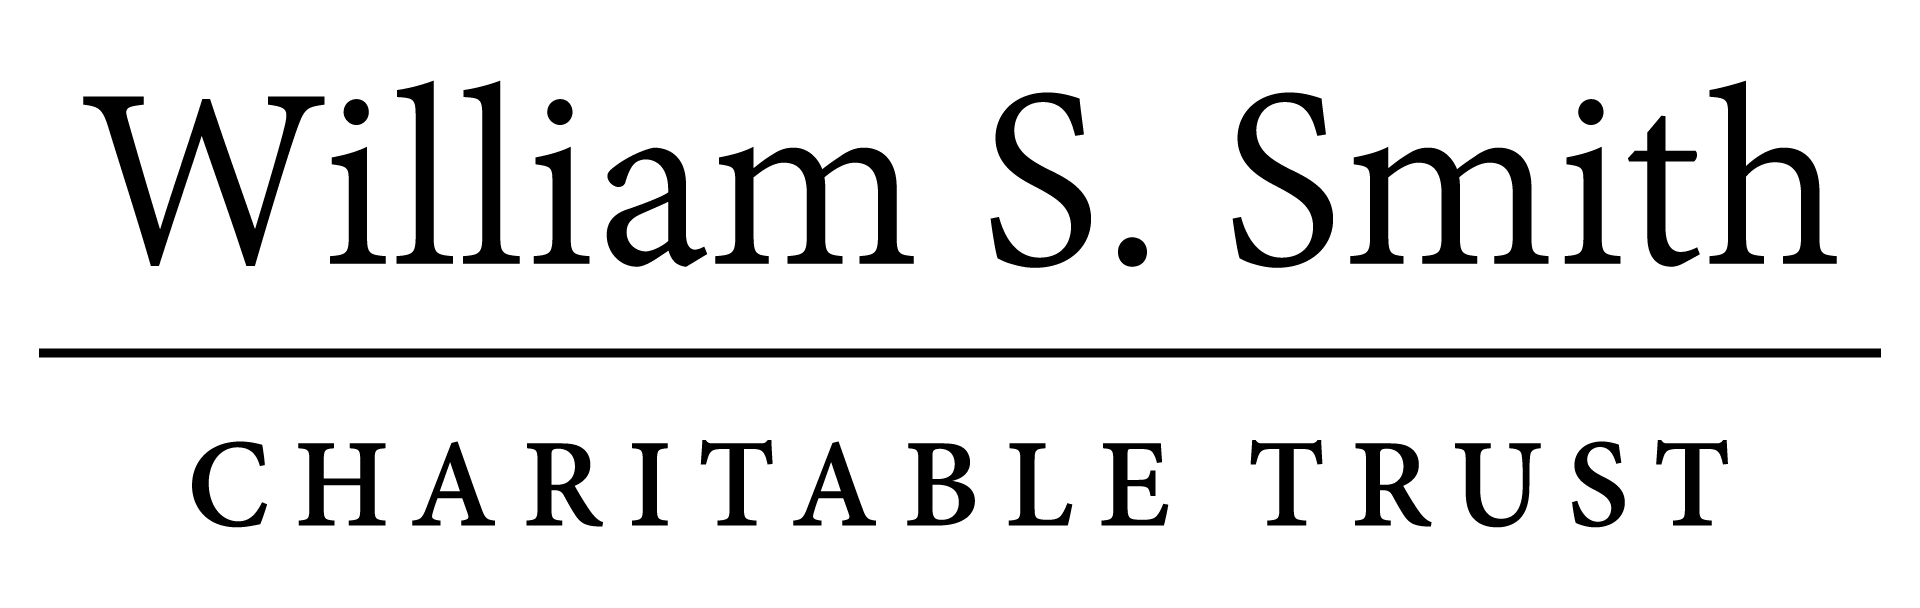 William S Smith Charitable Trust Logo Black-01